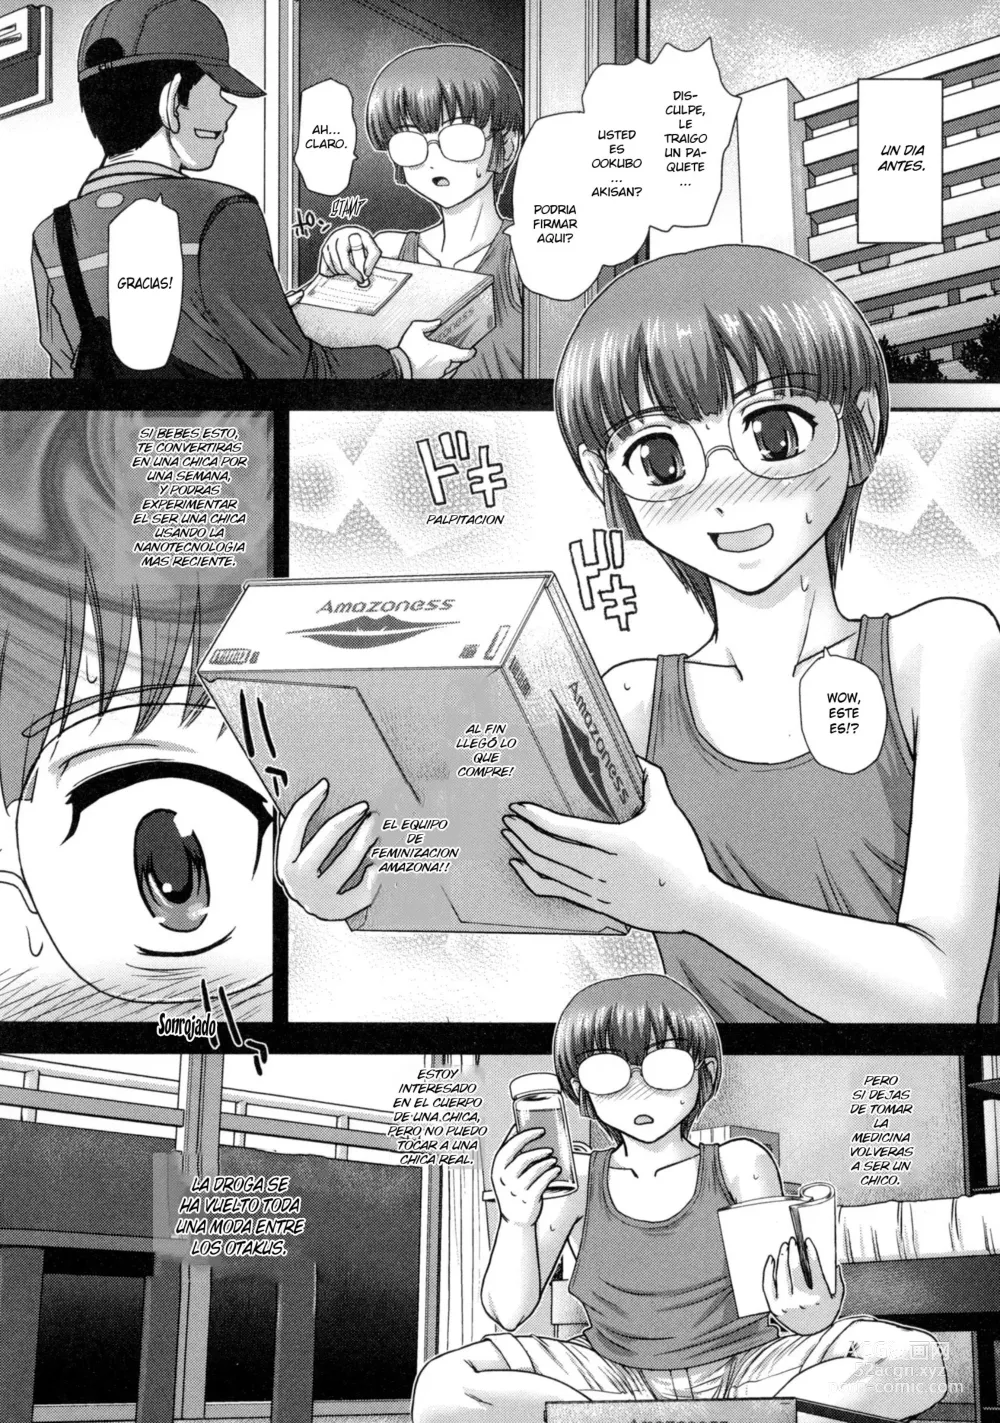 Page 2 of manga Feminization Call Center